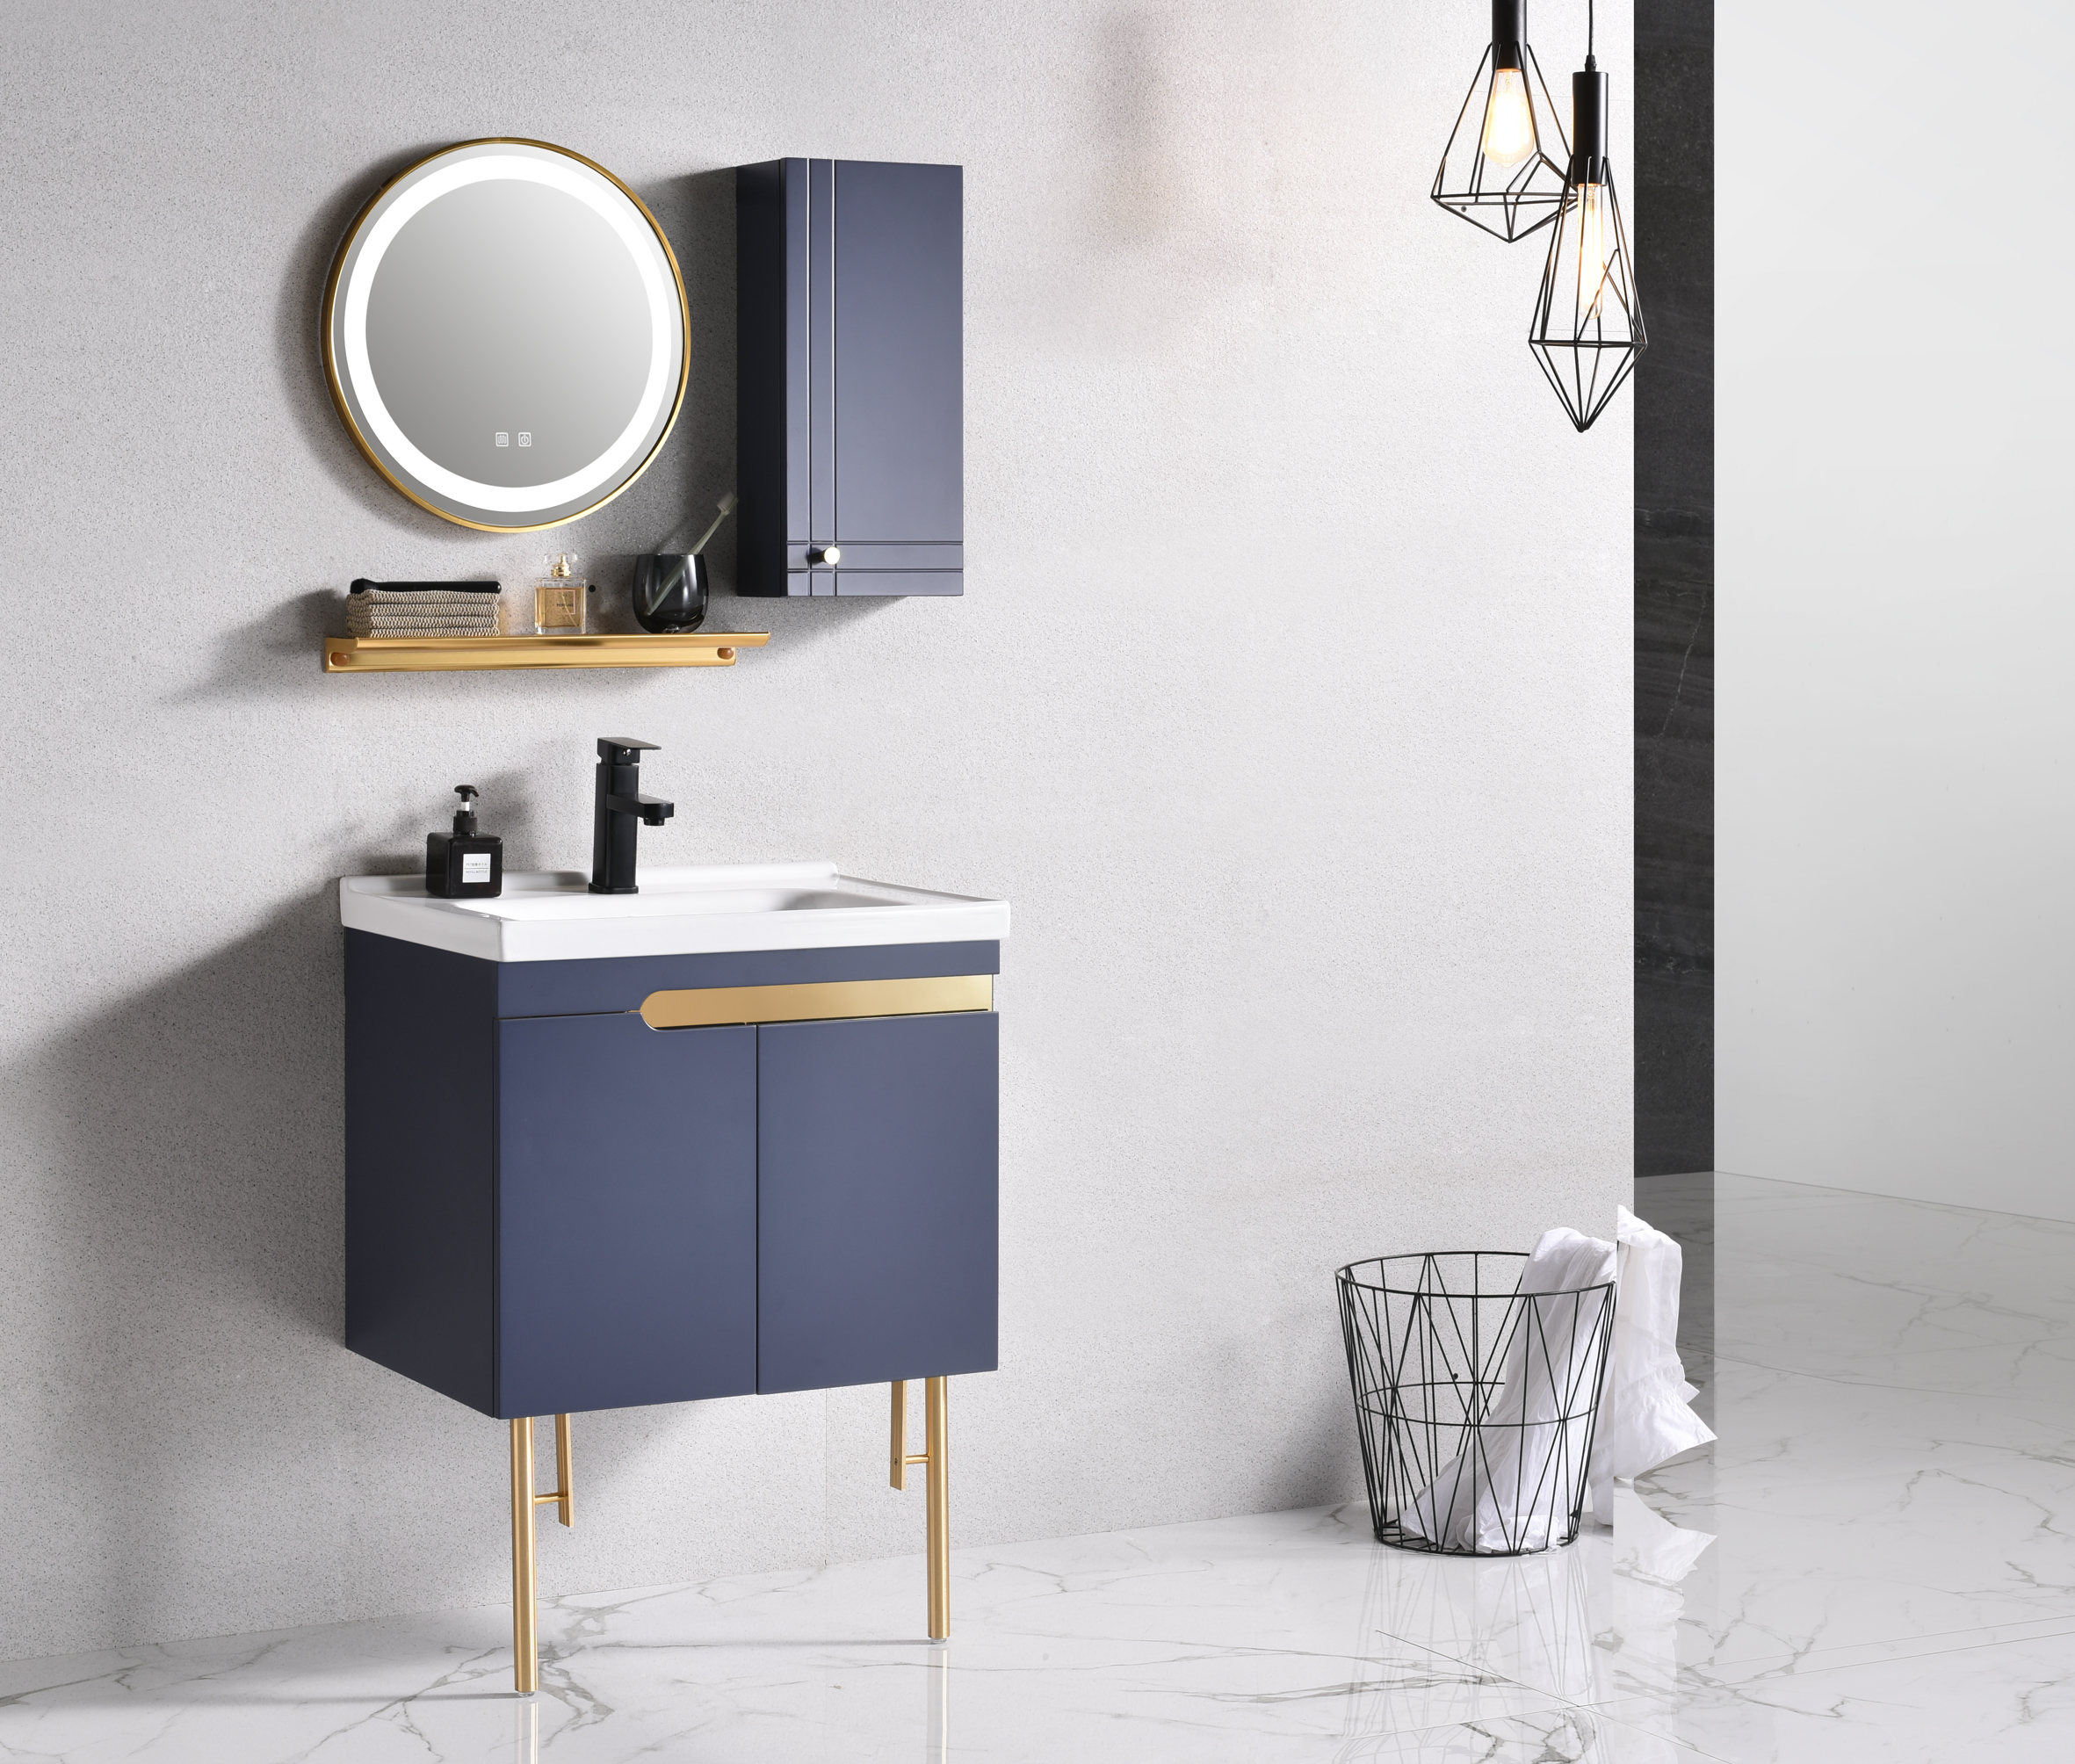 New Design Wholesale Furniture PVC Vanity Bathroom Cabinet with Sink